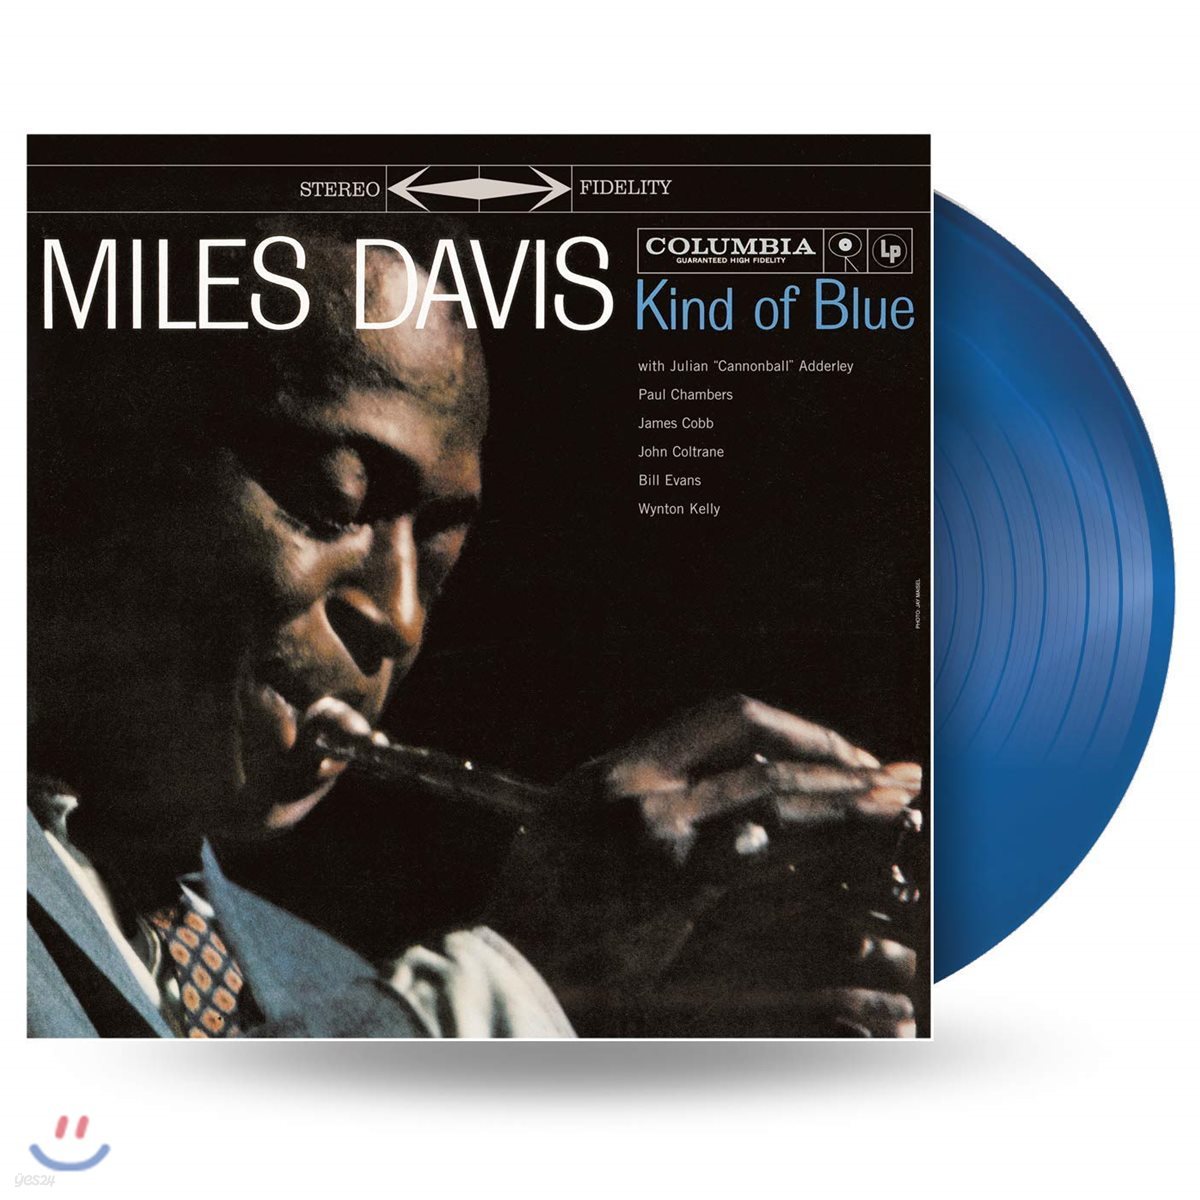 Miles Davis kind of blue 45rpm 限定版レコード - CD